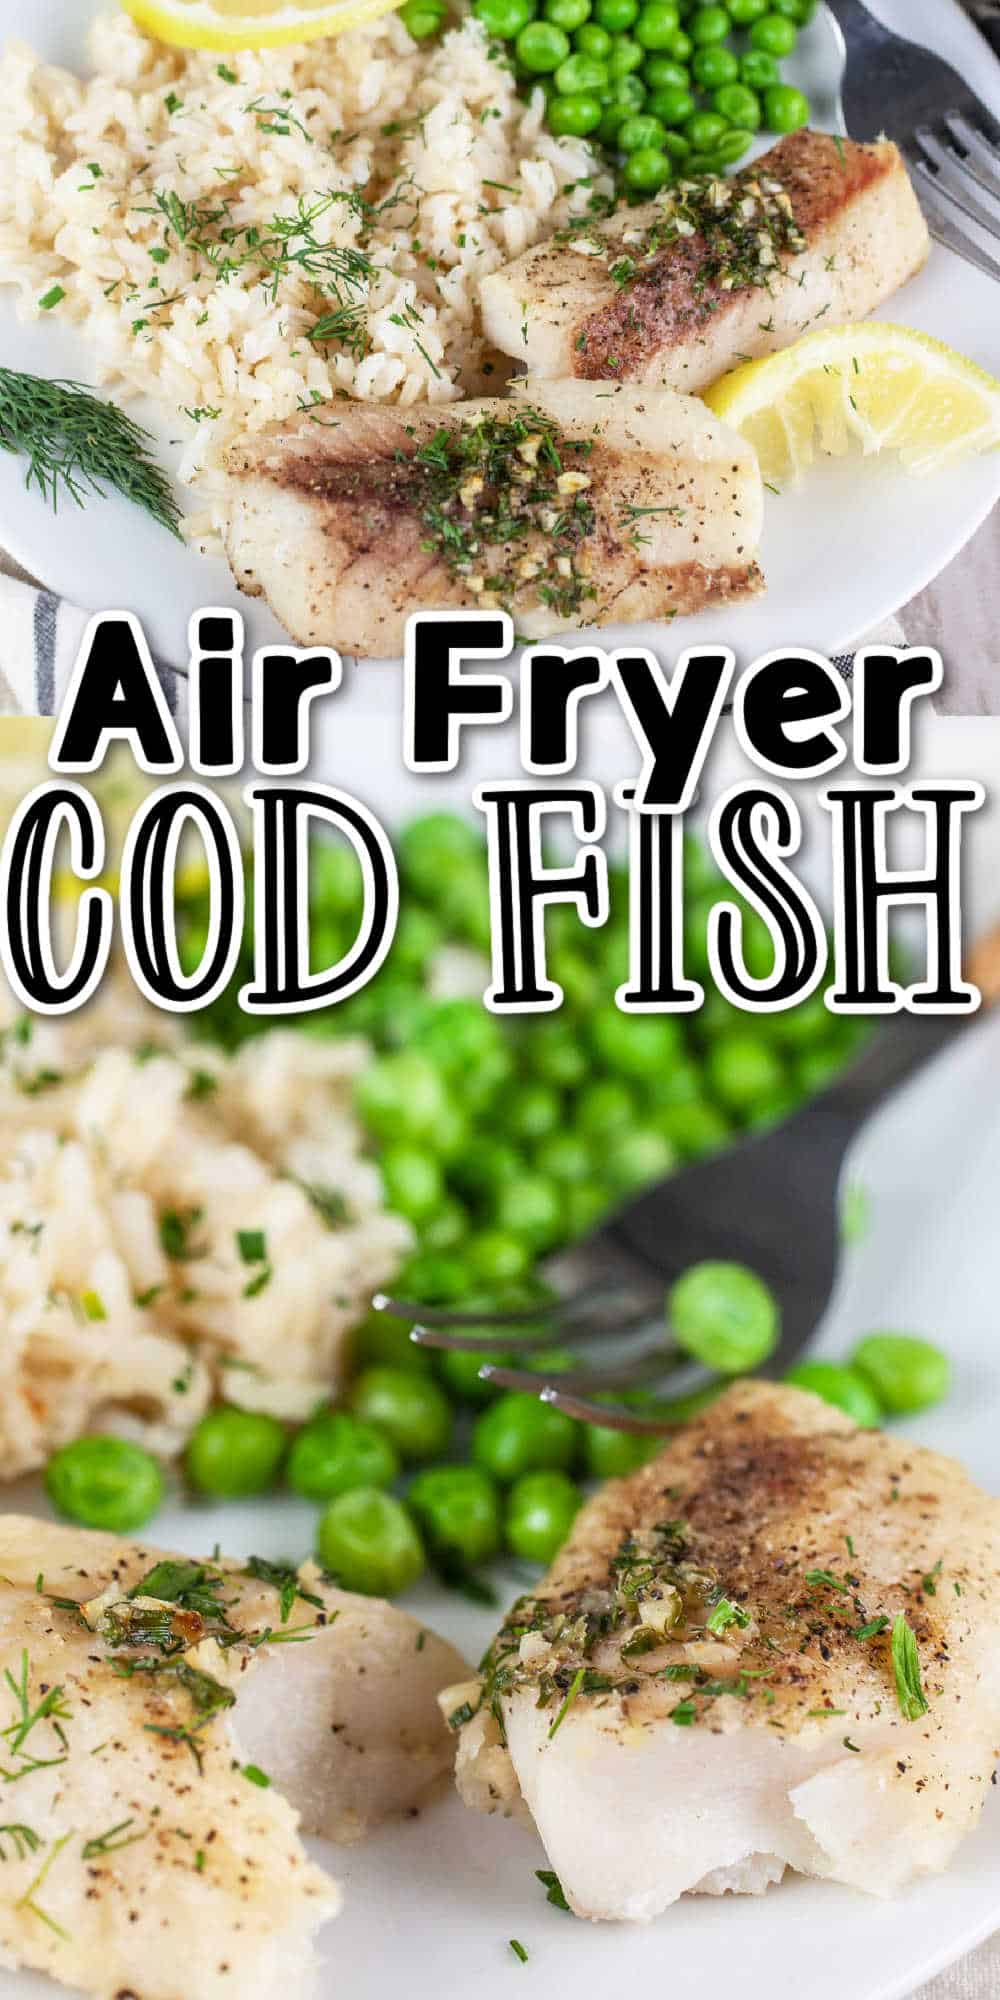 Air Fryer Cod Fish Recipe (With Garlic Butter) • MidgetMomma